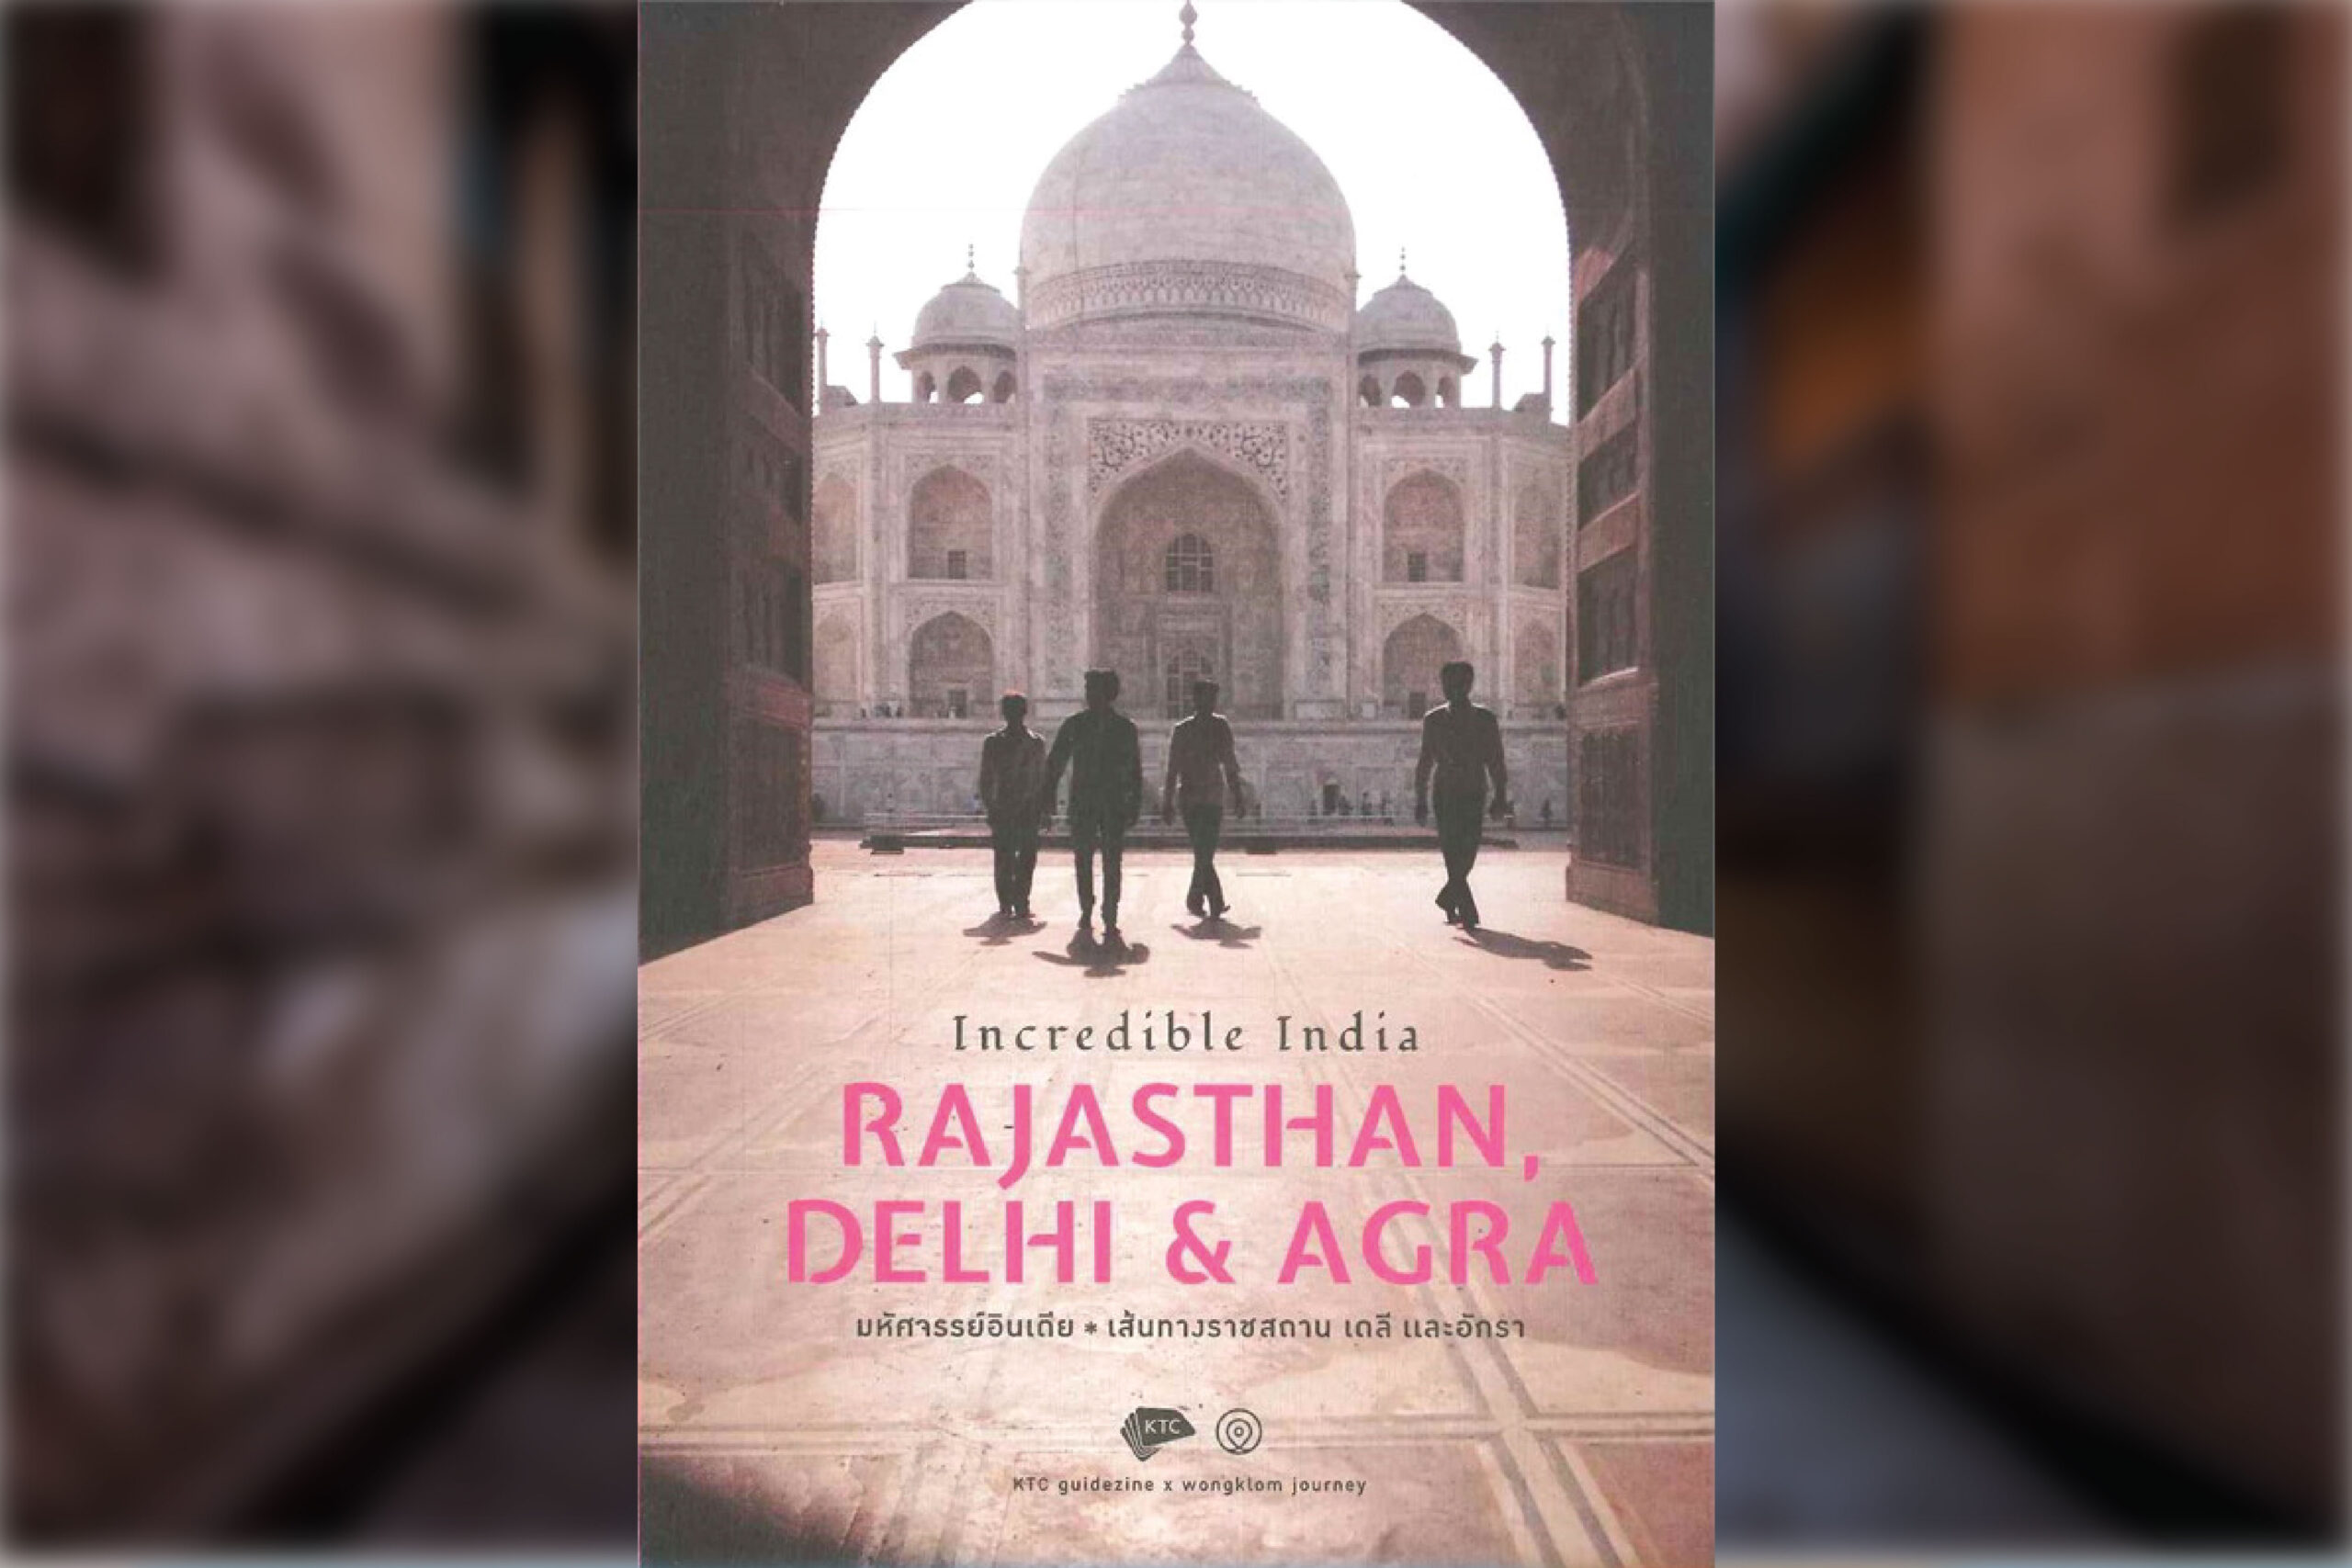 1. Rajasthan, Delhi & Agra